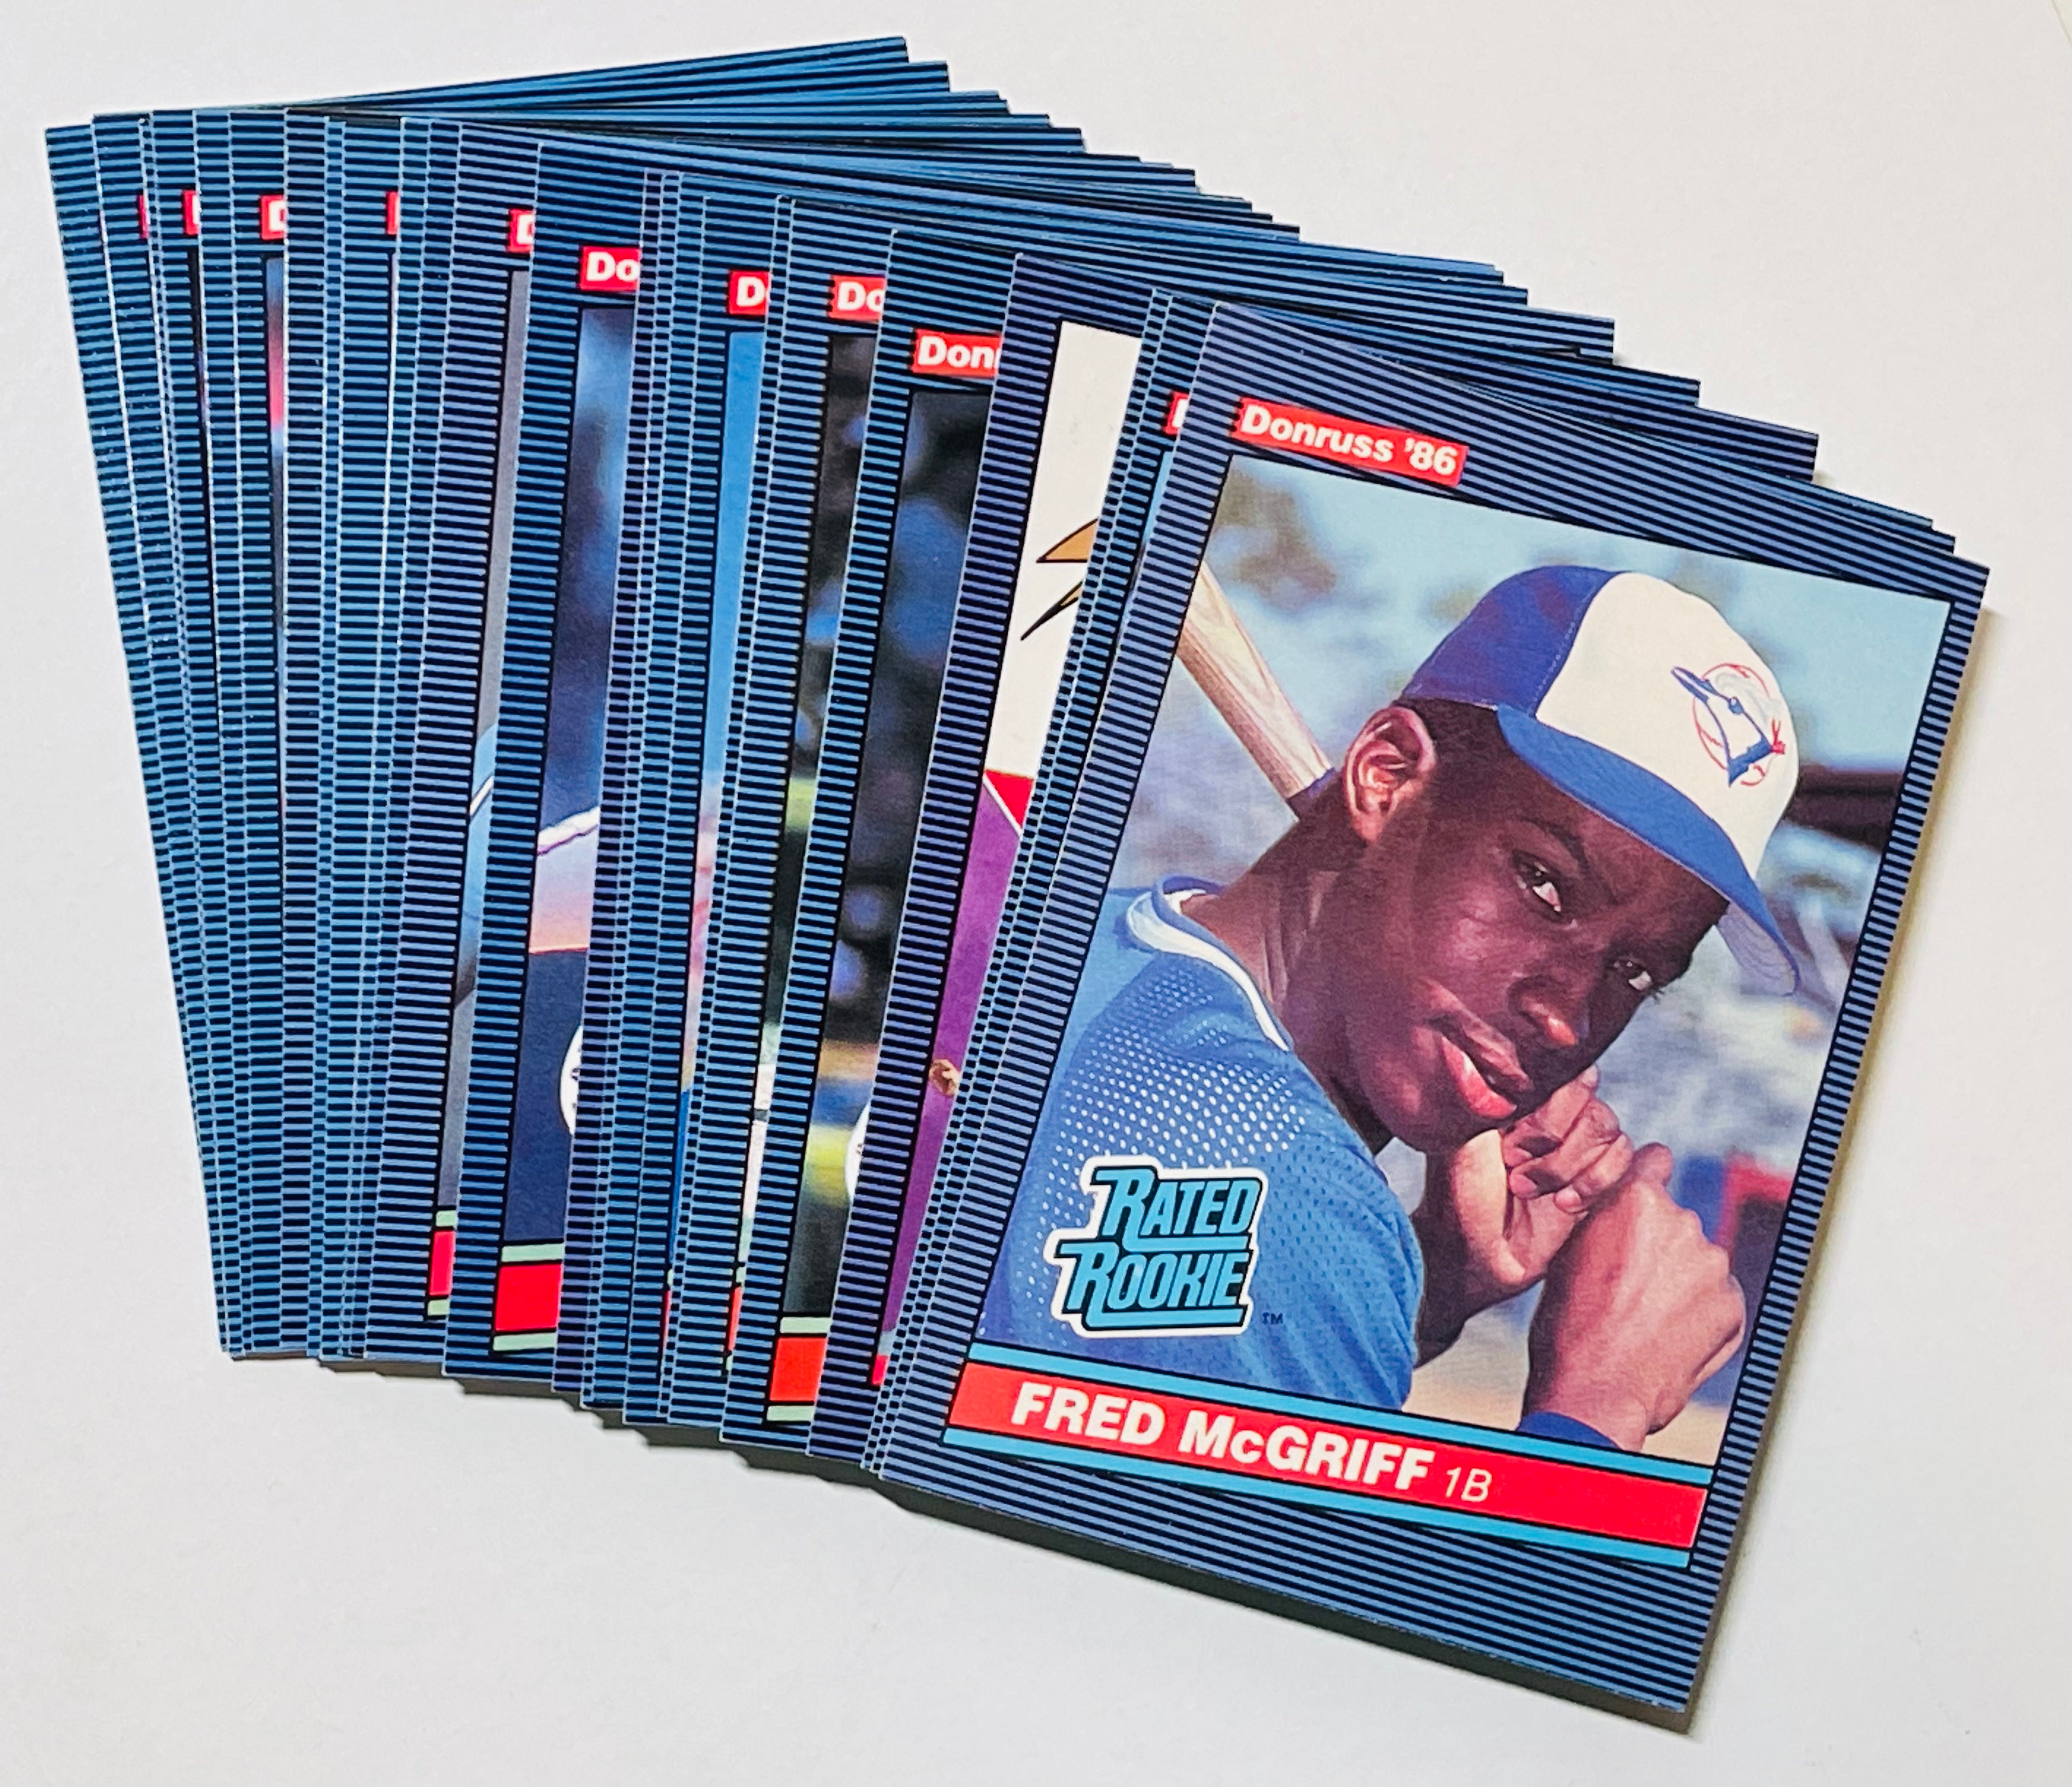 1986 Donruss Blue Jays baseball team set